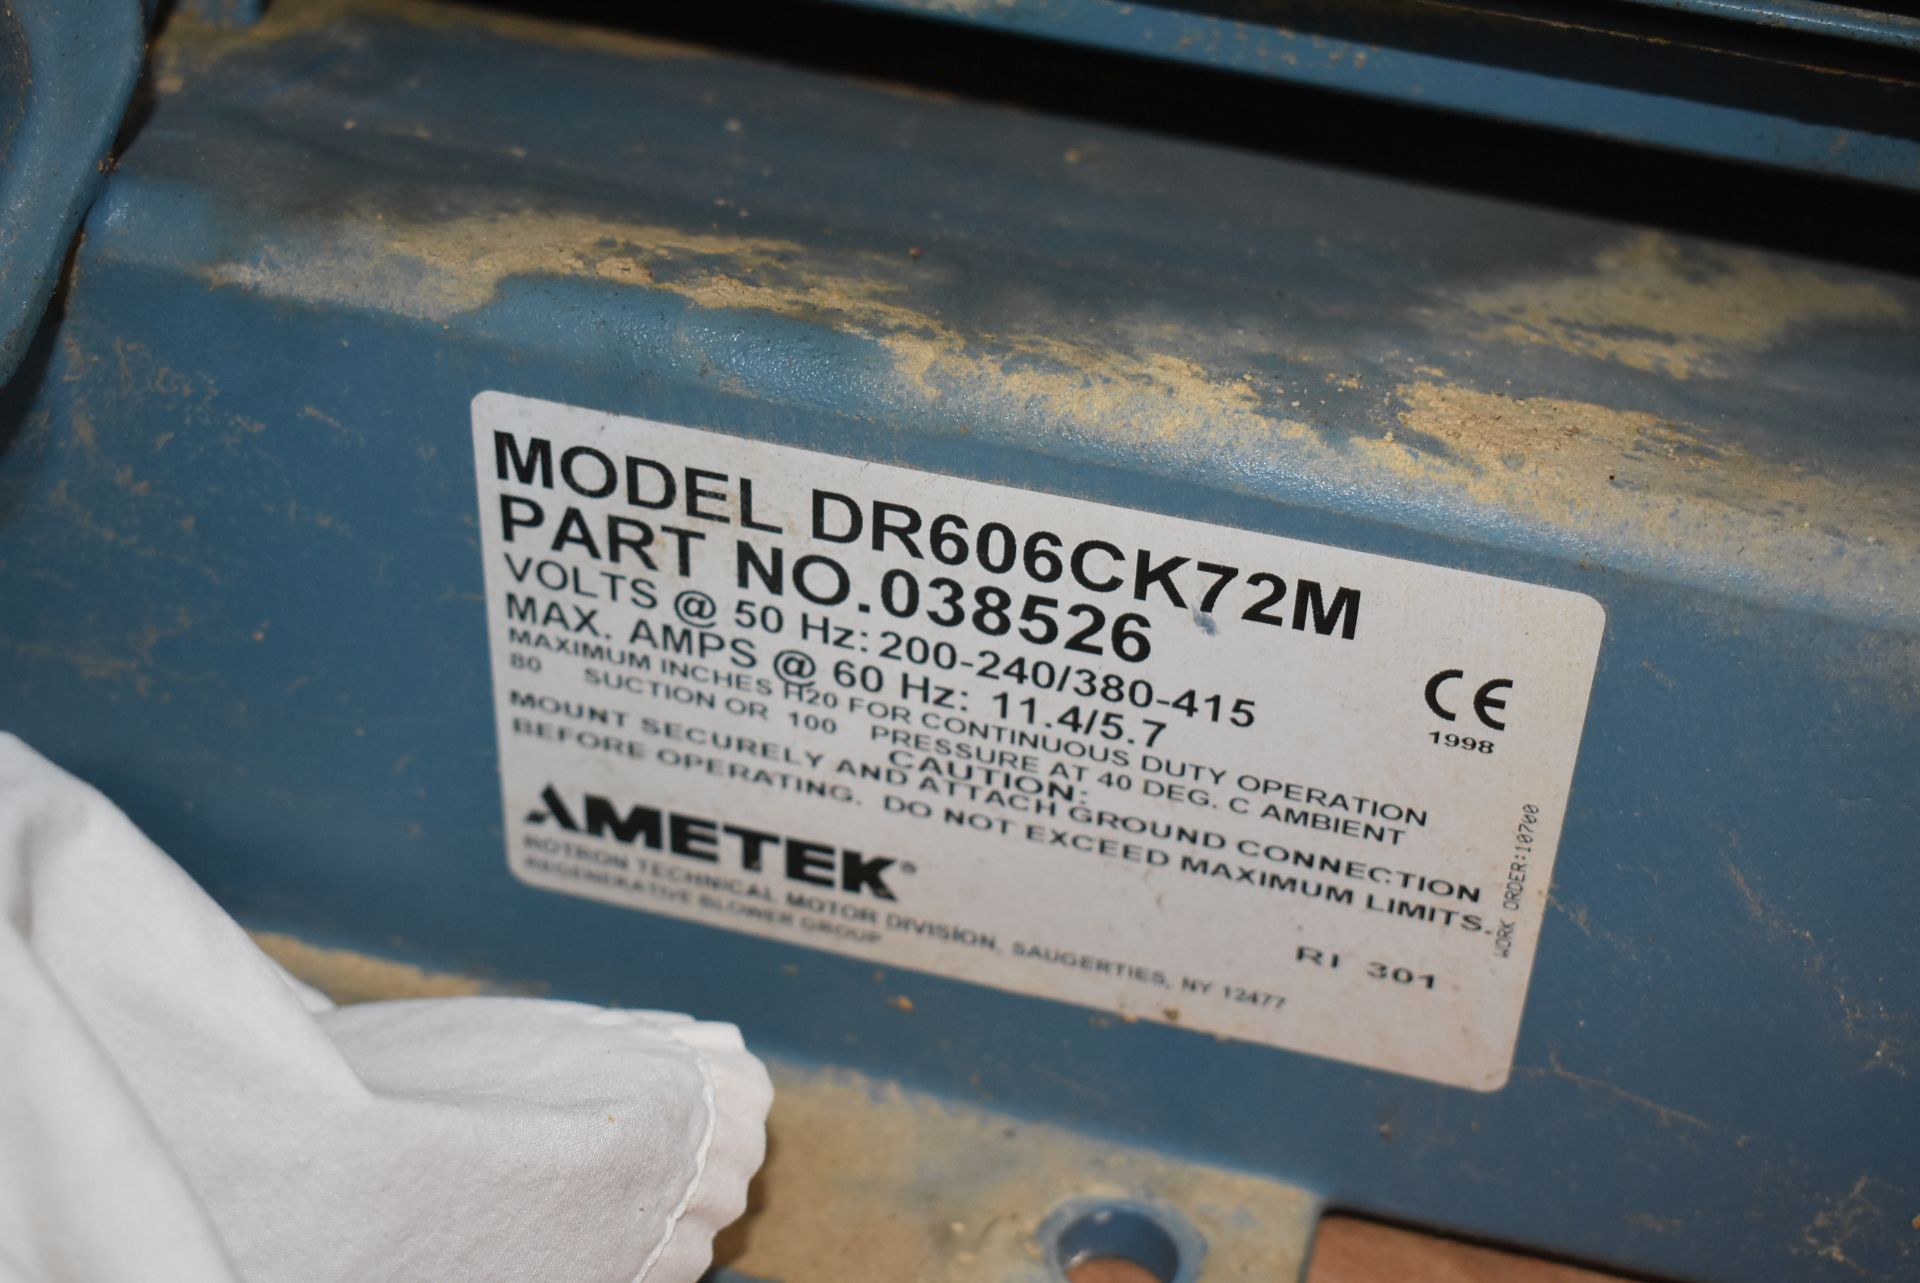 Ametek EG Rotron Model #DR606CK72M Blower w/Motor. RIGGING/LOADING FEE $30 - Image 2 of 3